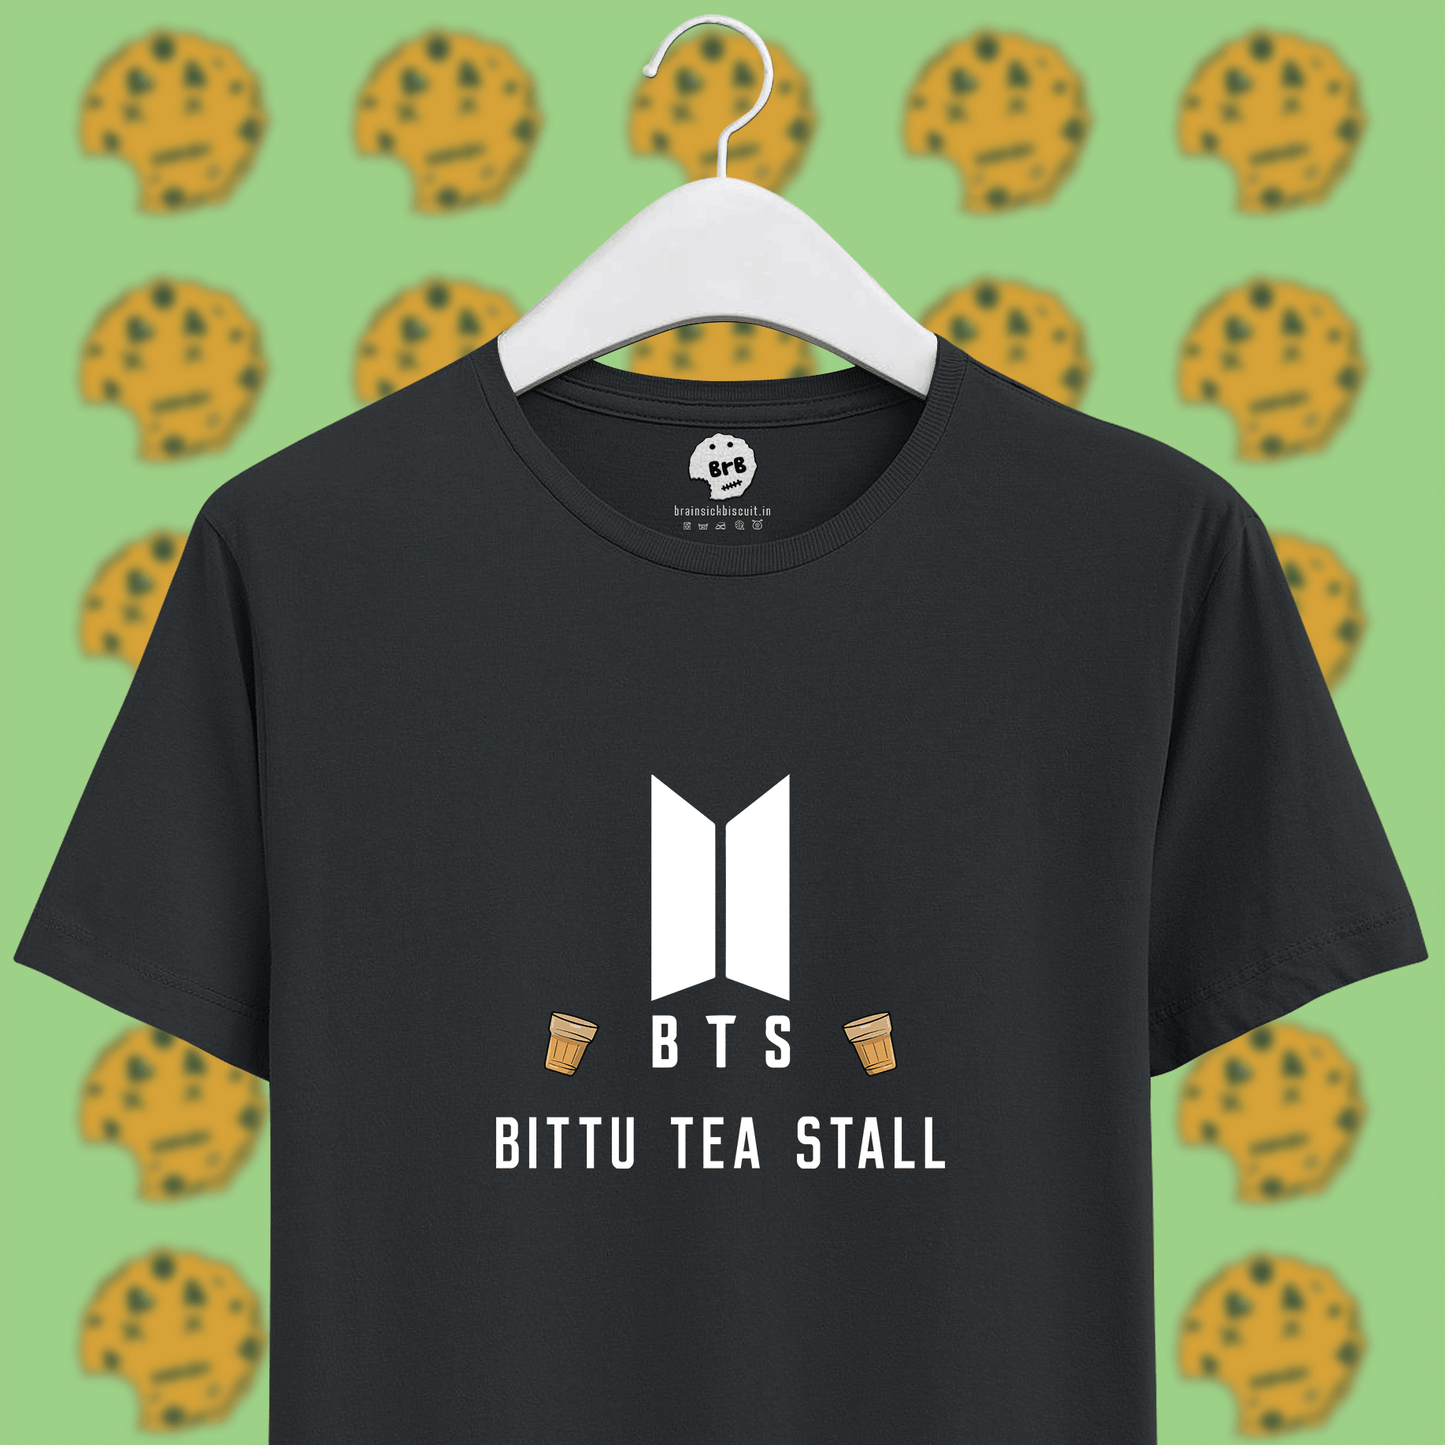 BTS logo with bittu tea stall joke on unisex steel grey half sleeves cotton t-shirt.